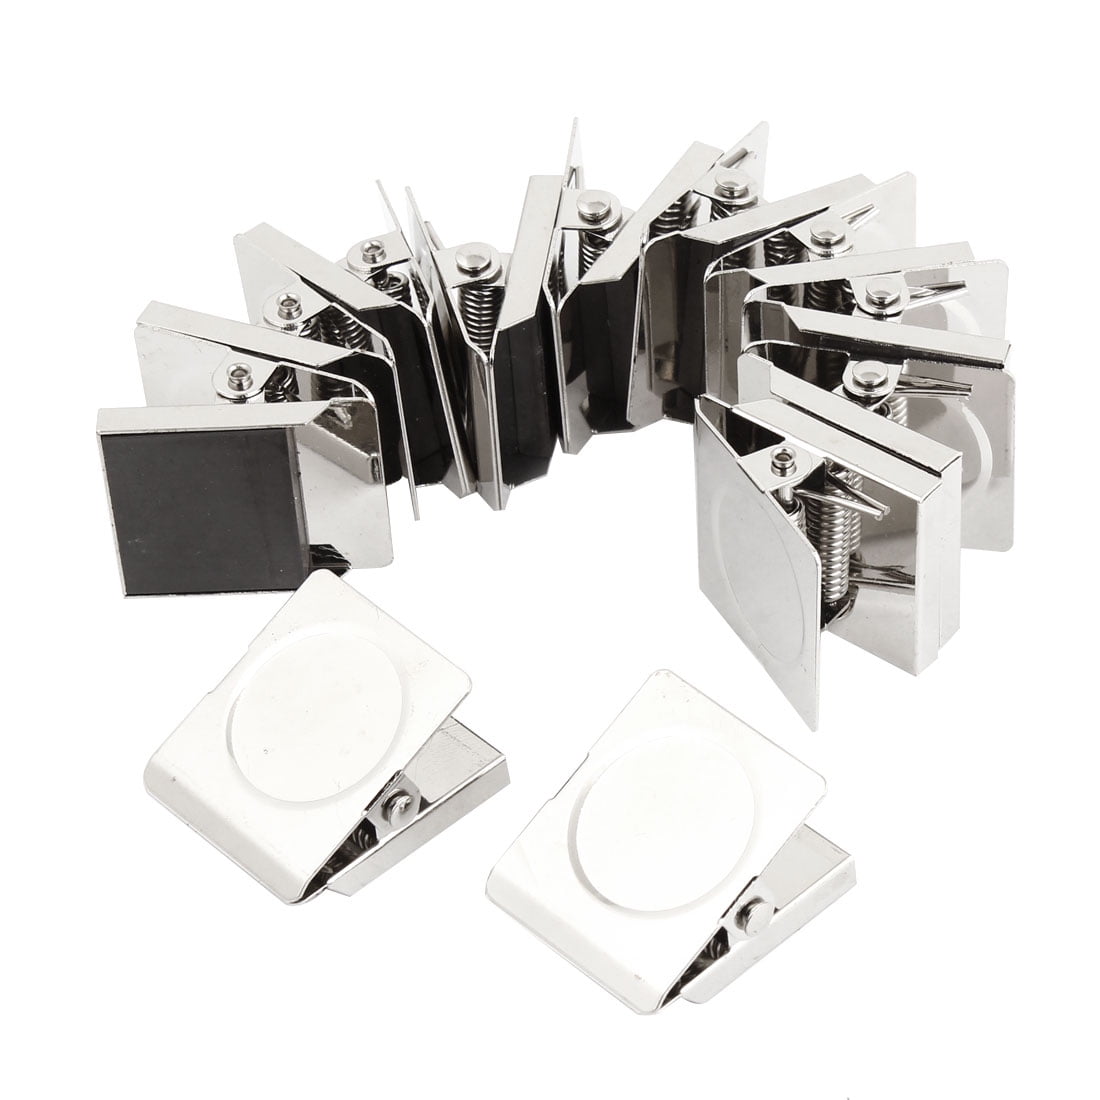 4 x Premium Magnetic Clip Fridge Paper/Memo/Quick Message Holder Office Home 